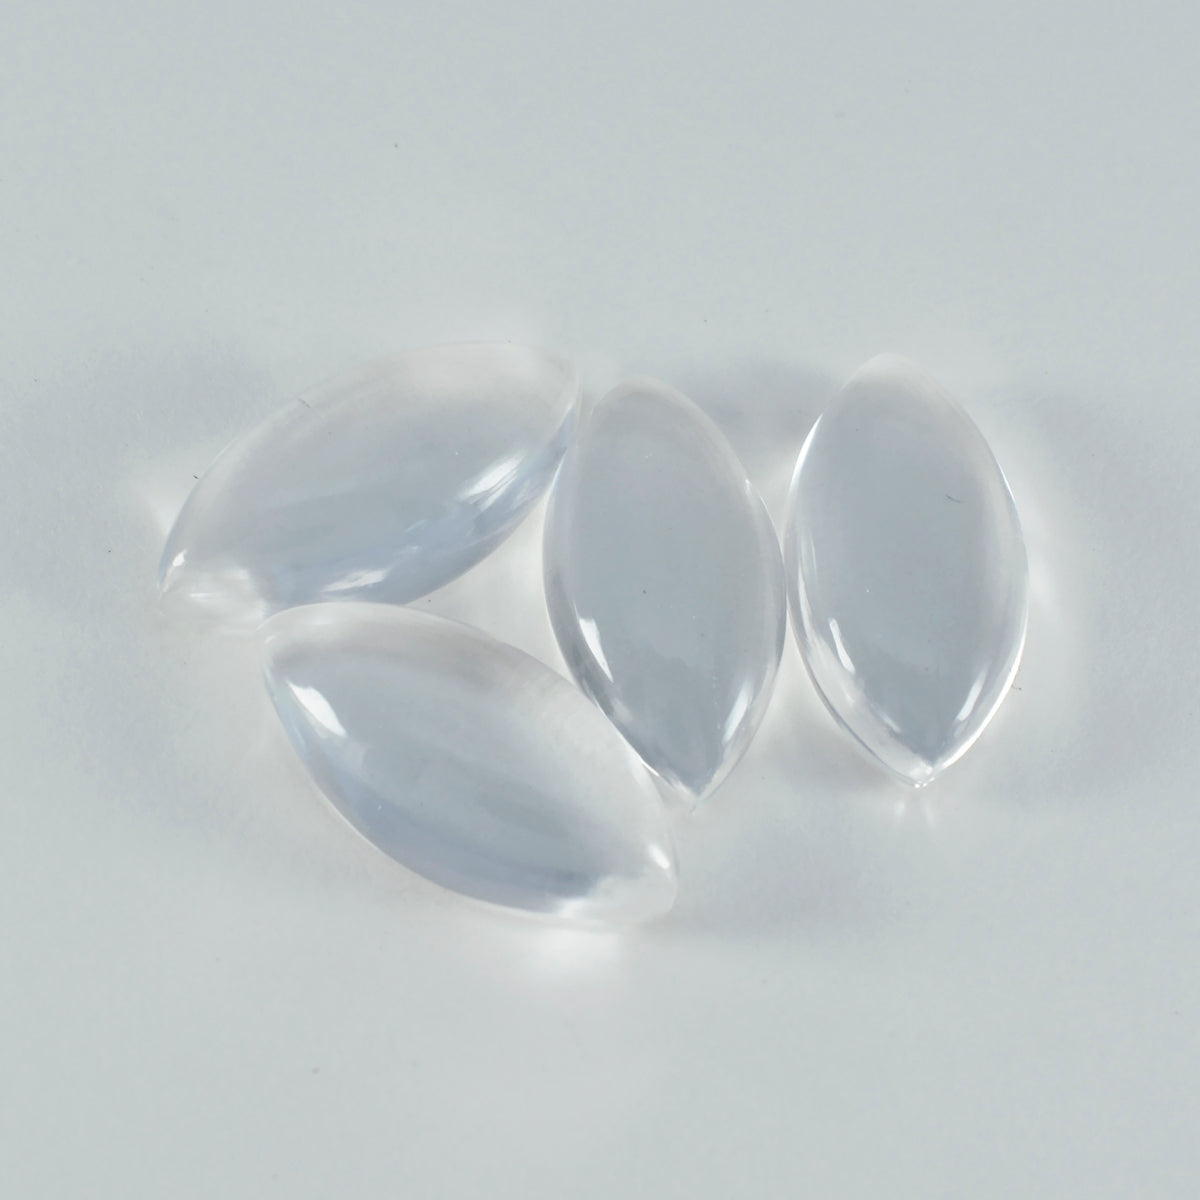 Riyogems 1PC White Crystal Quartz Cabochon 10x20 mm Marquise Shape nice-looking Quality Loose Gem